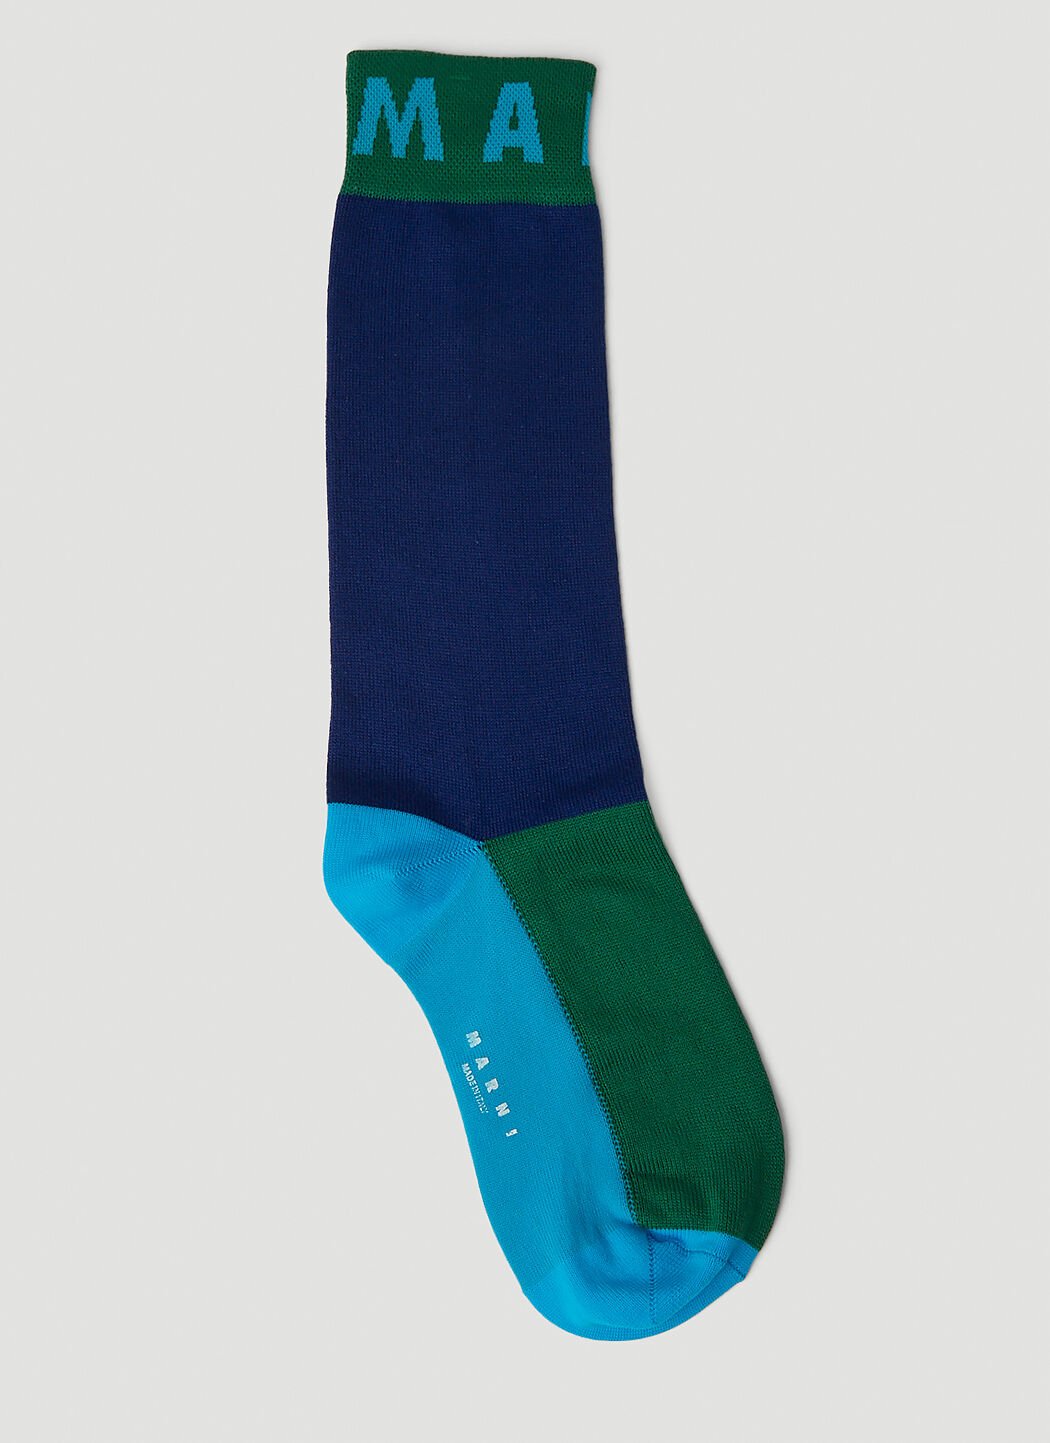 Marni Colour Block Socks Navy mni0151035